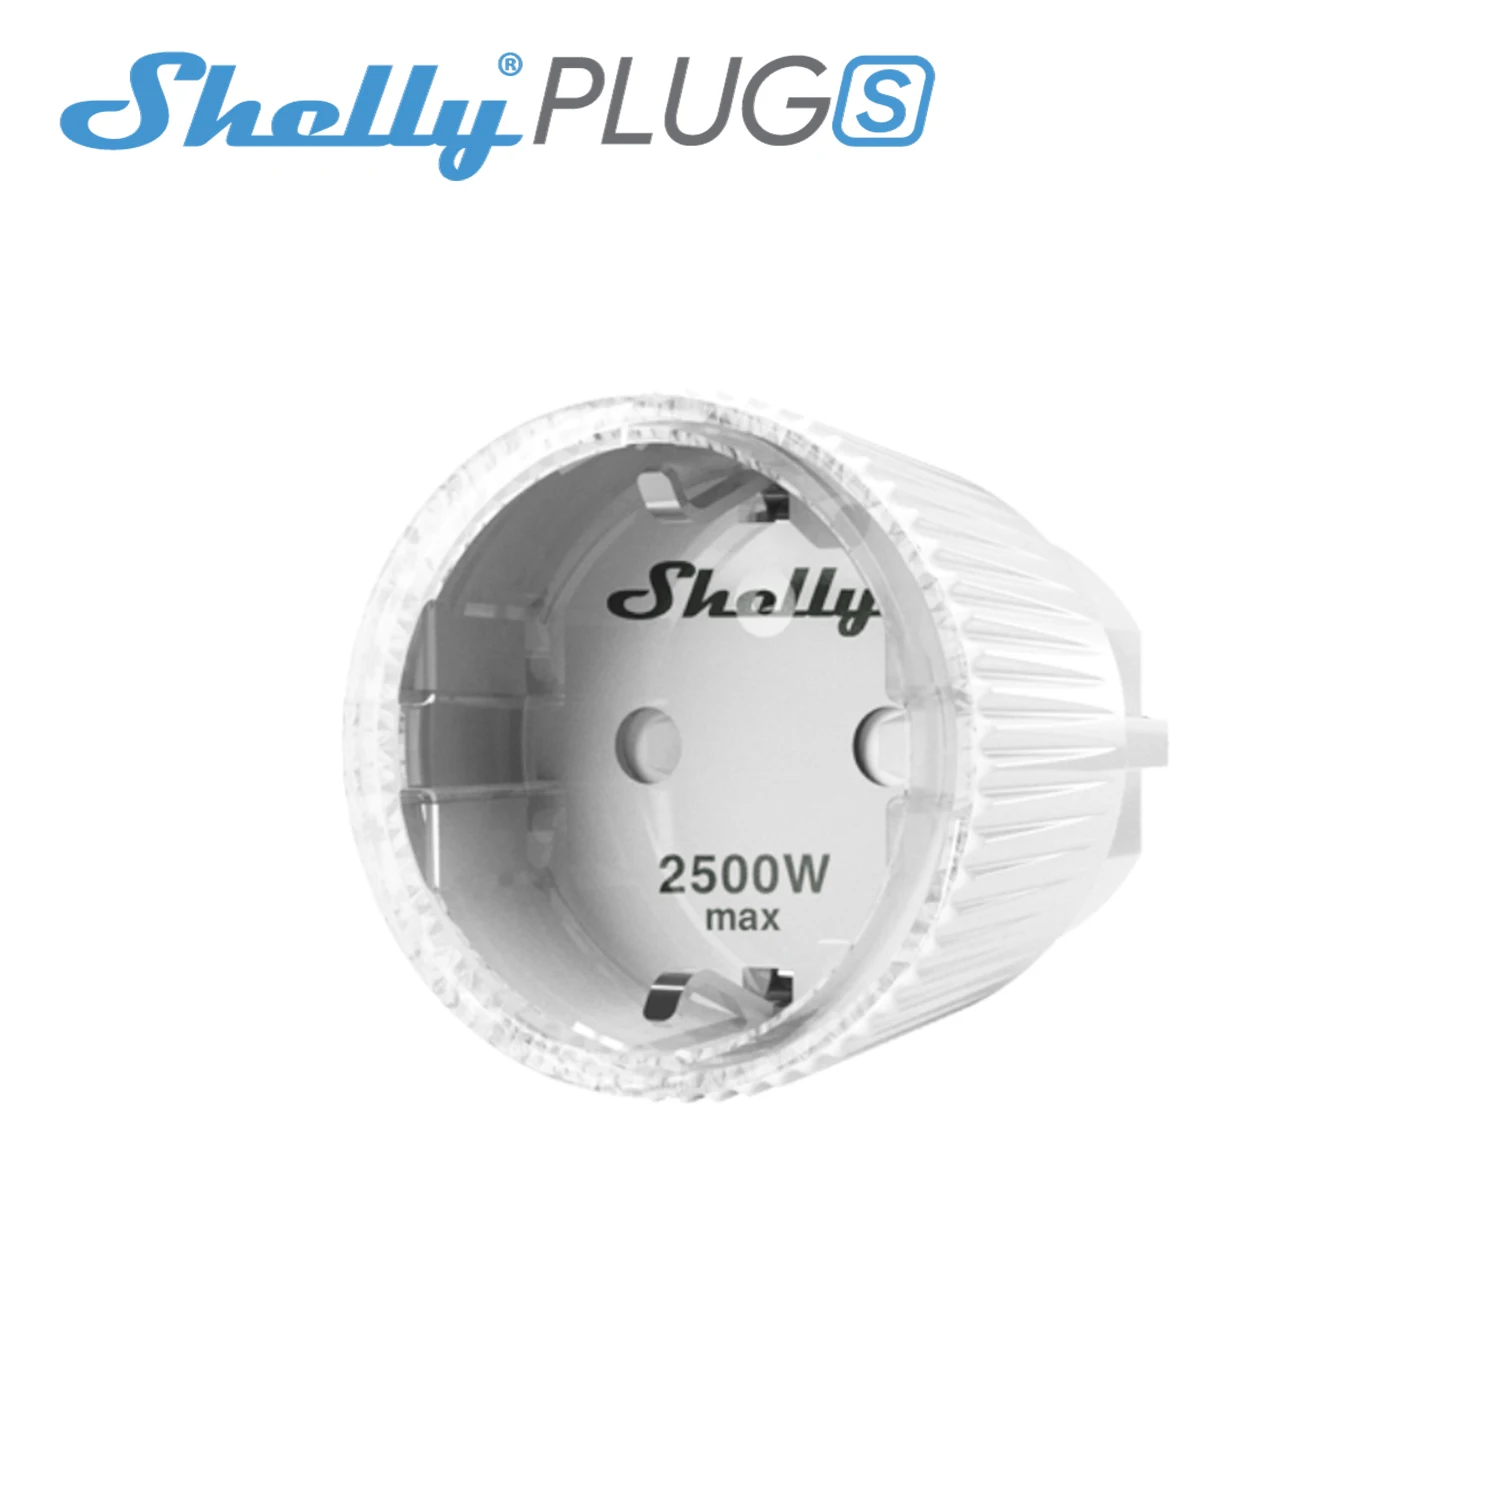 Enchufe Portátil Inteligente Shelly Plug S Plus 12A 2500W WiFi/BT